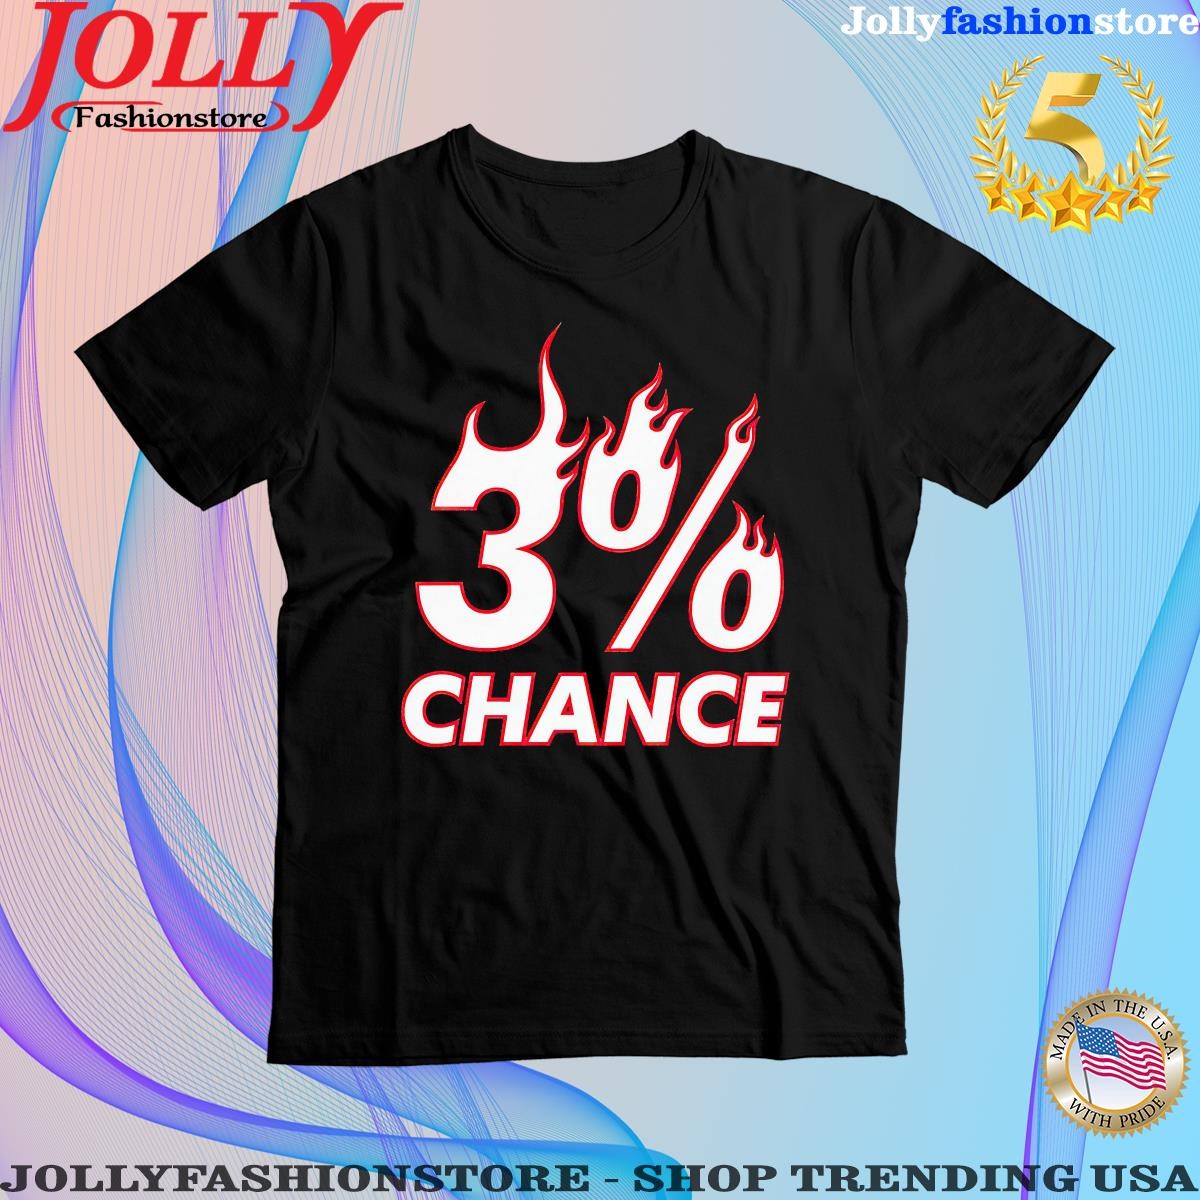 3% CHANCE TEE Shirt